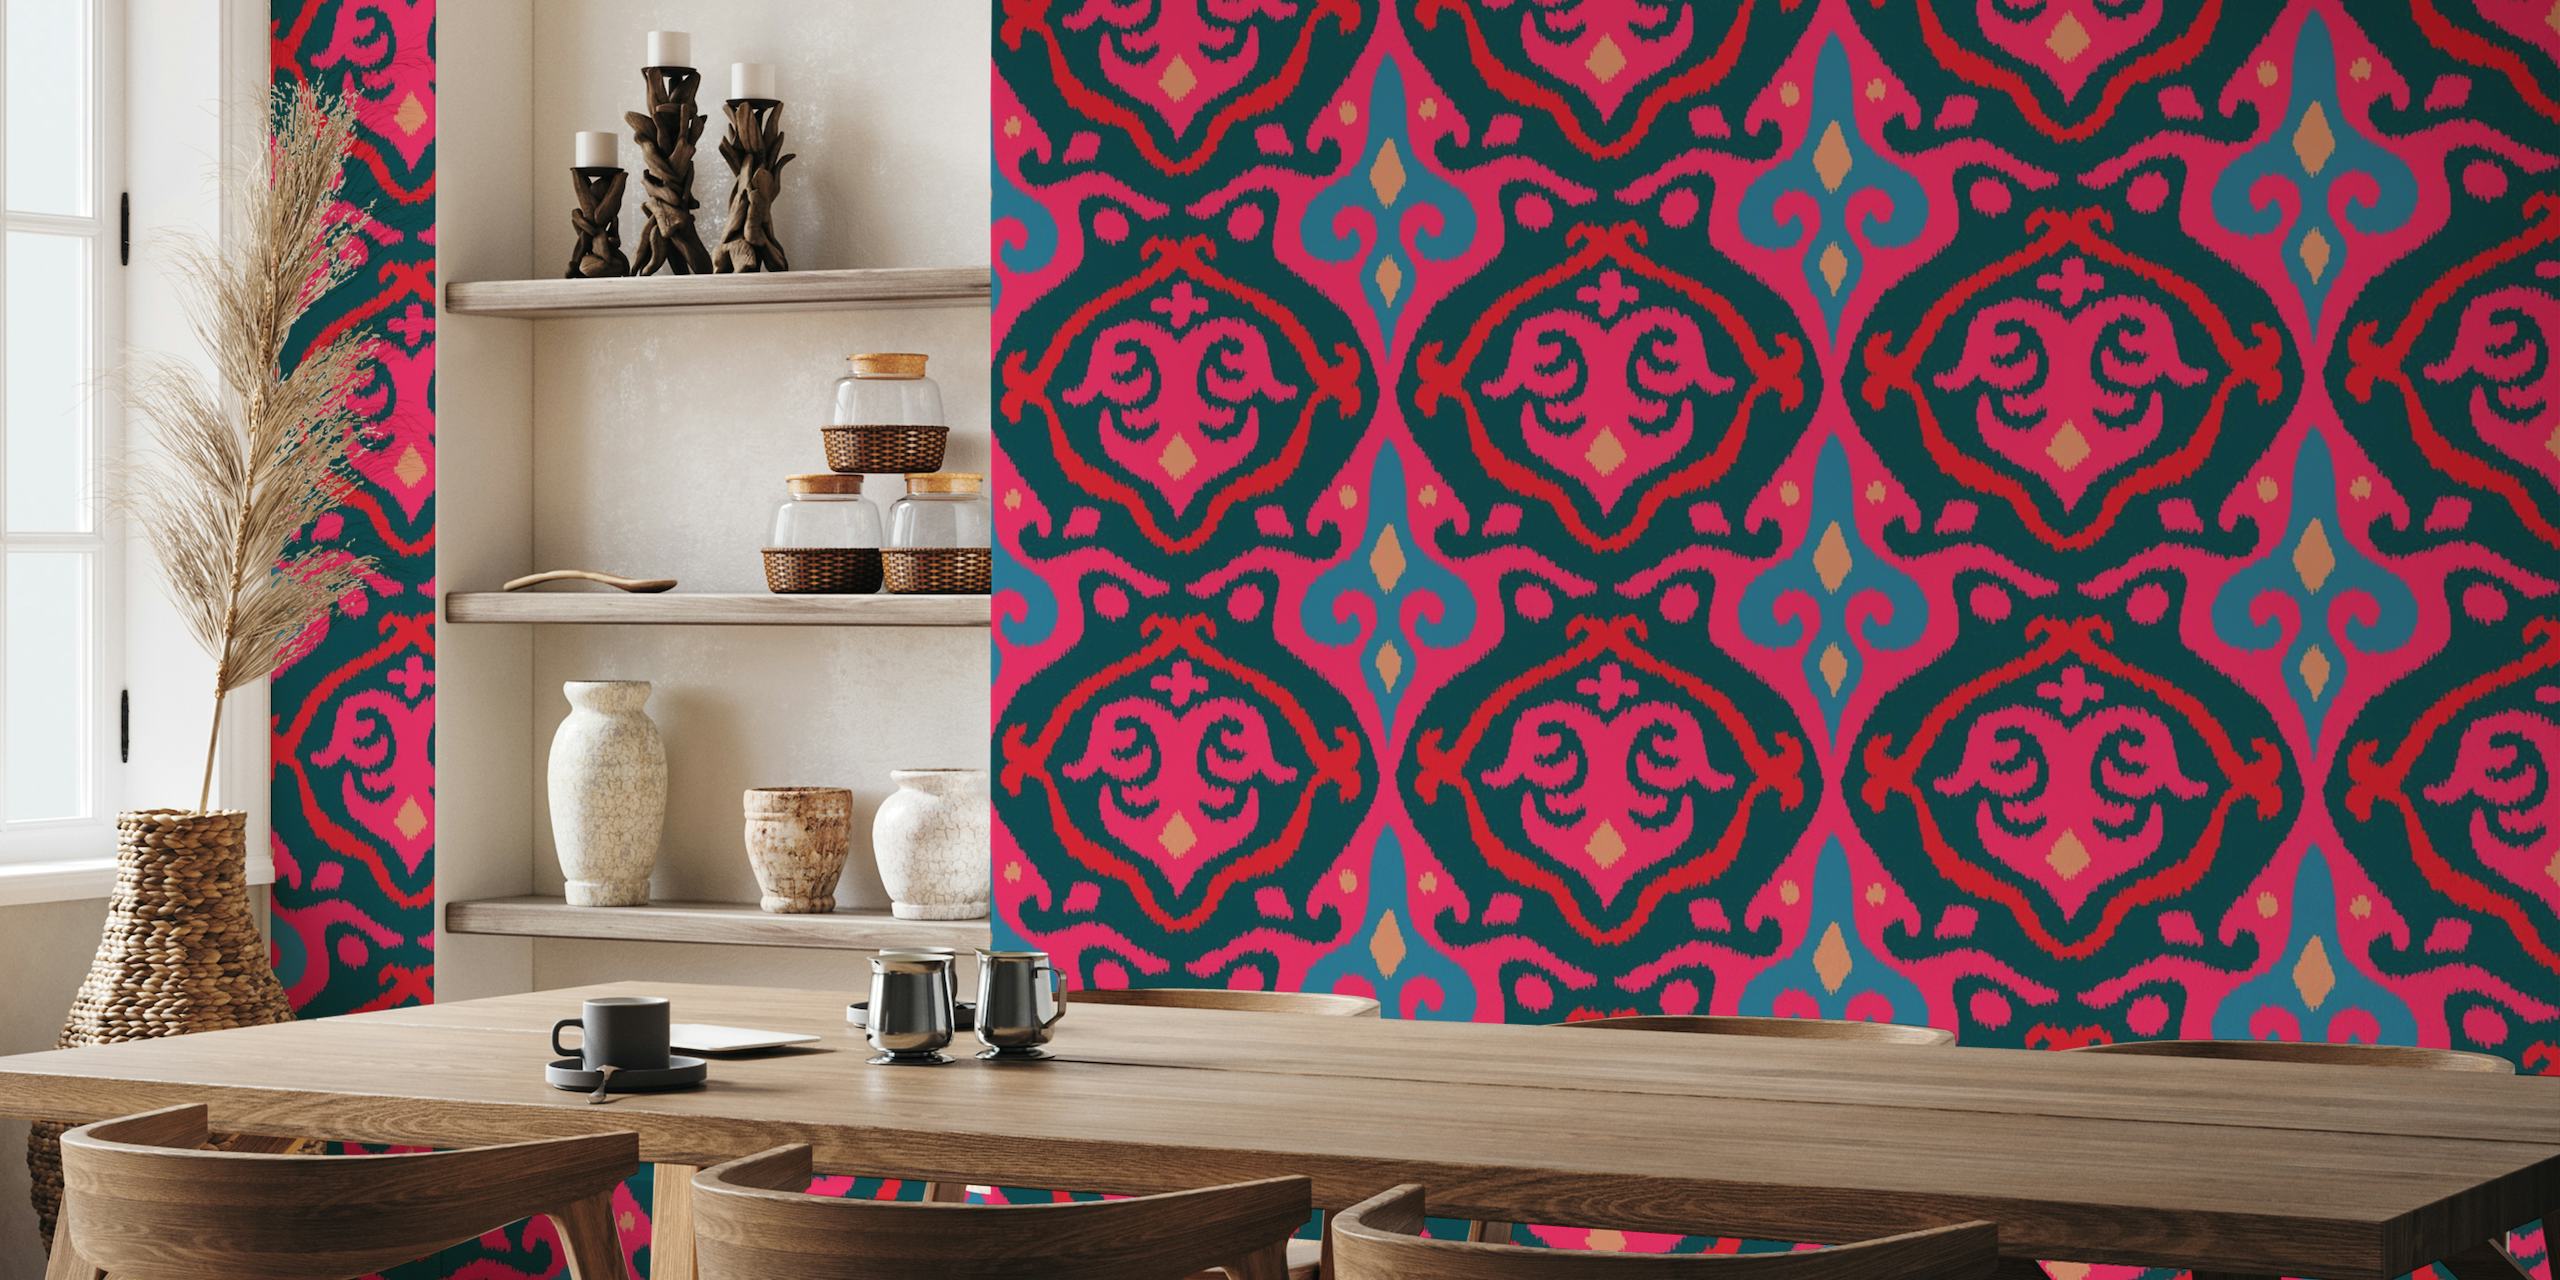 JAVA Boho Ikat Woven Texture Wandbild mit großflächigem rosa und blauem Muster